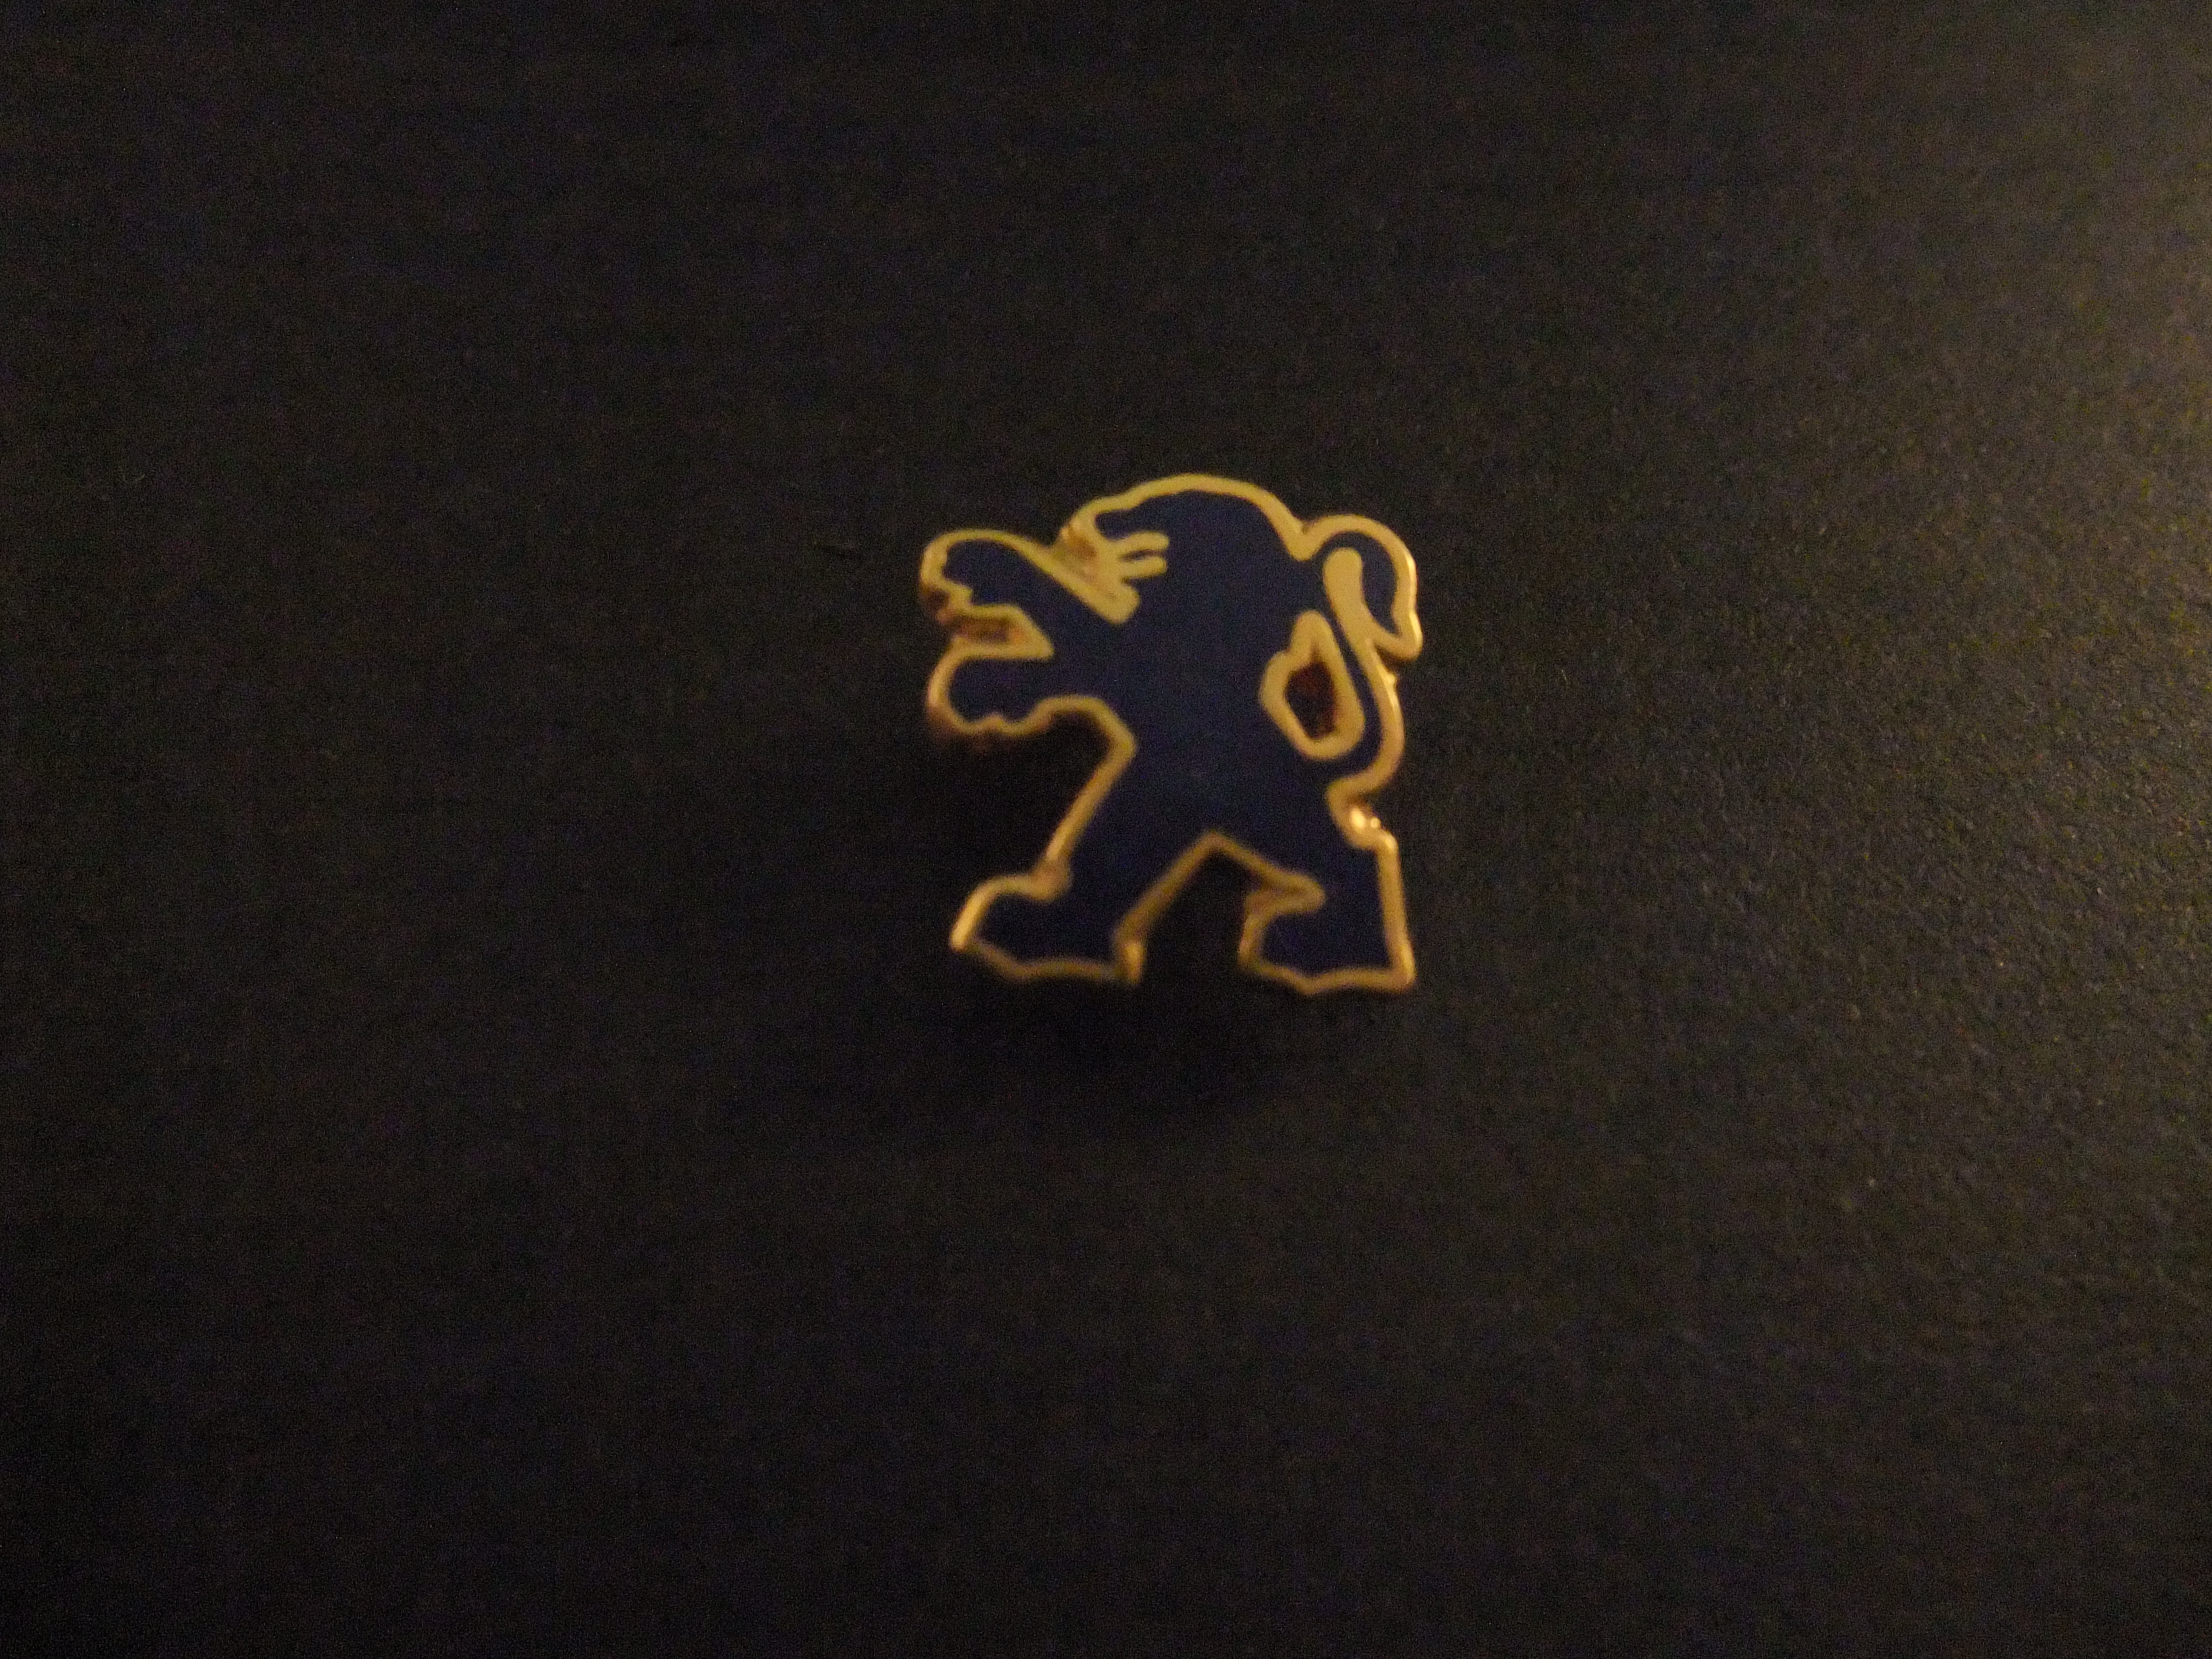 Peugeot blauw logo goudkleurige rand